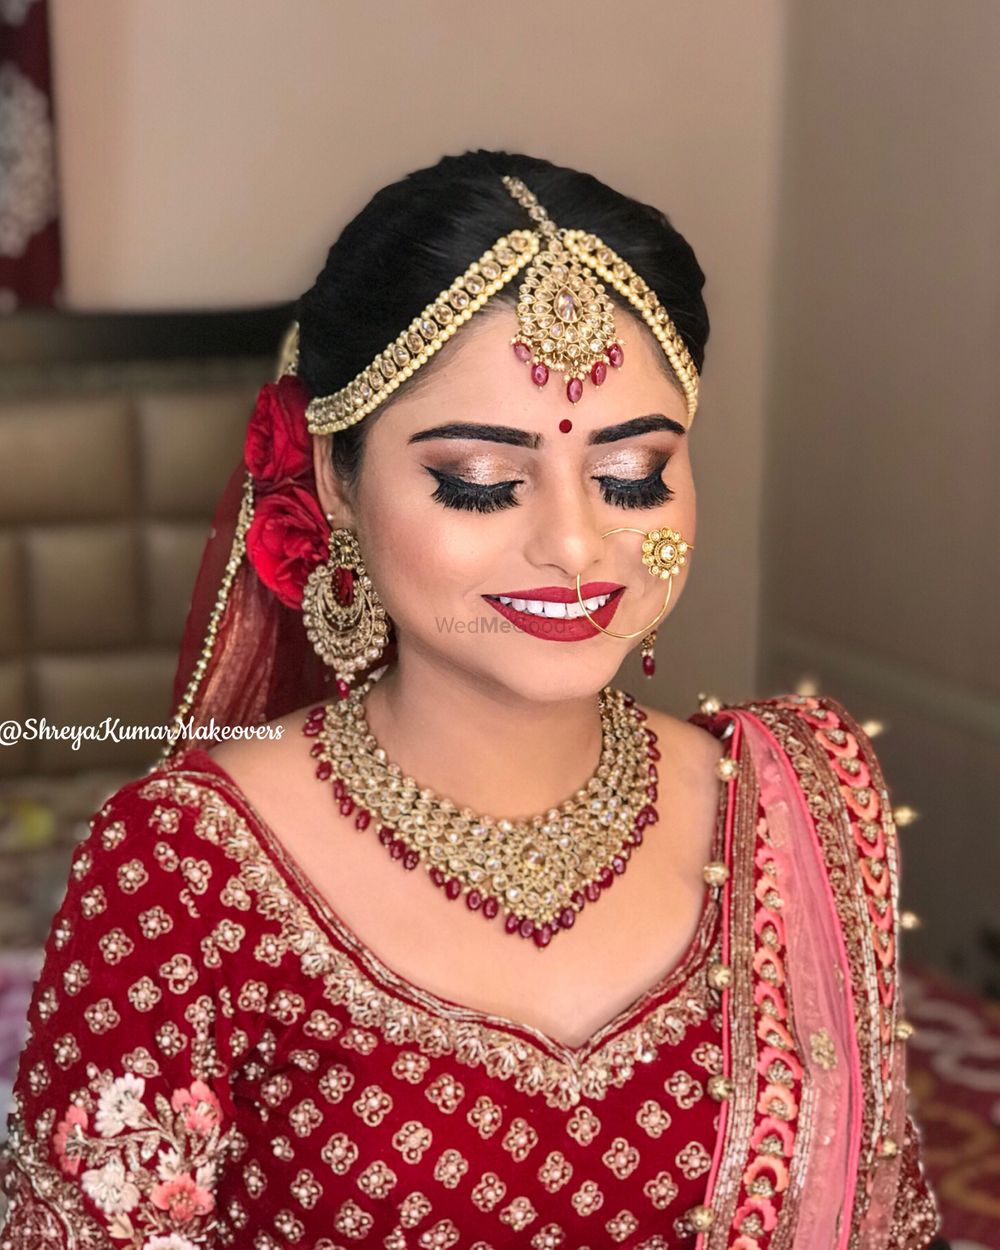 Photo of Red bridal lehenga with beautiful bridal makeup